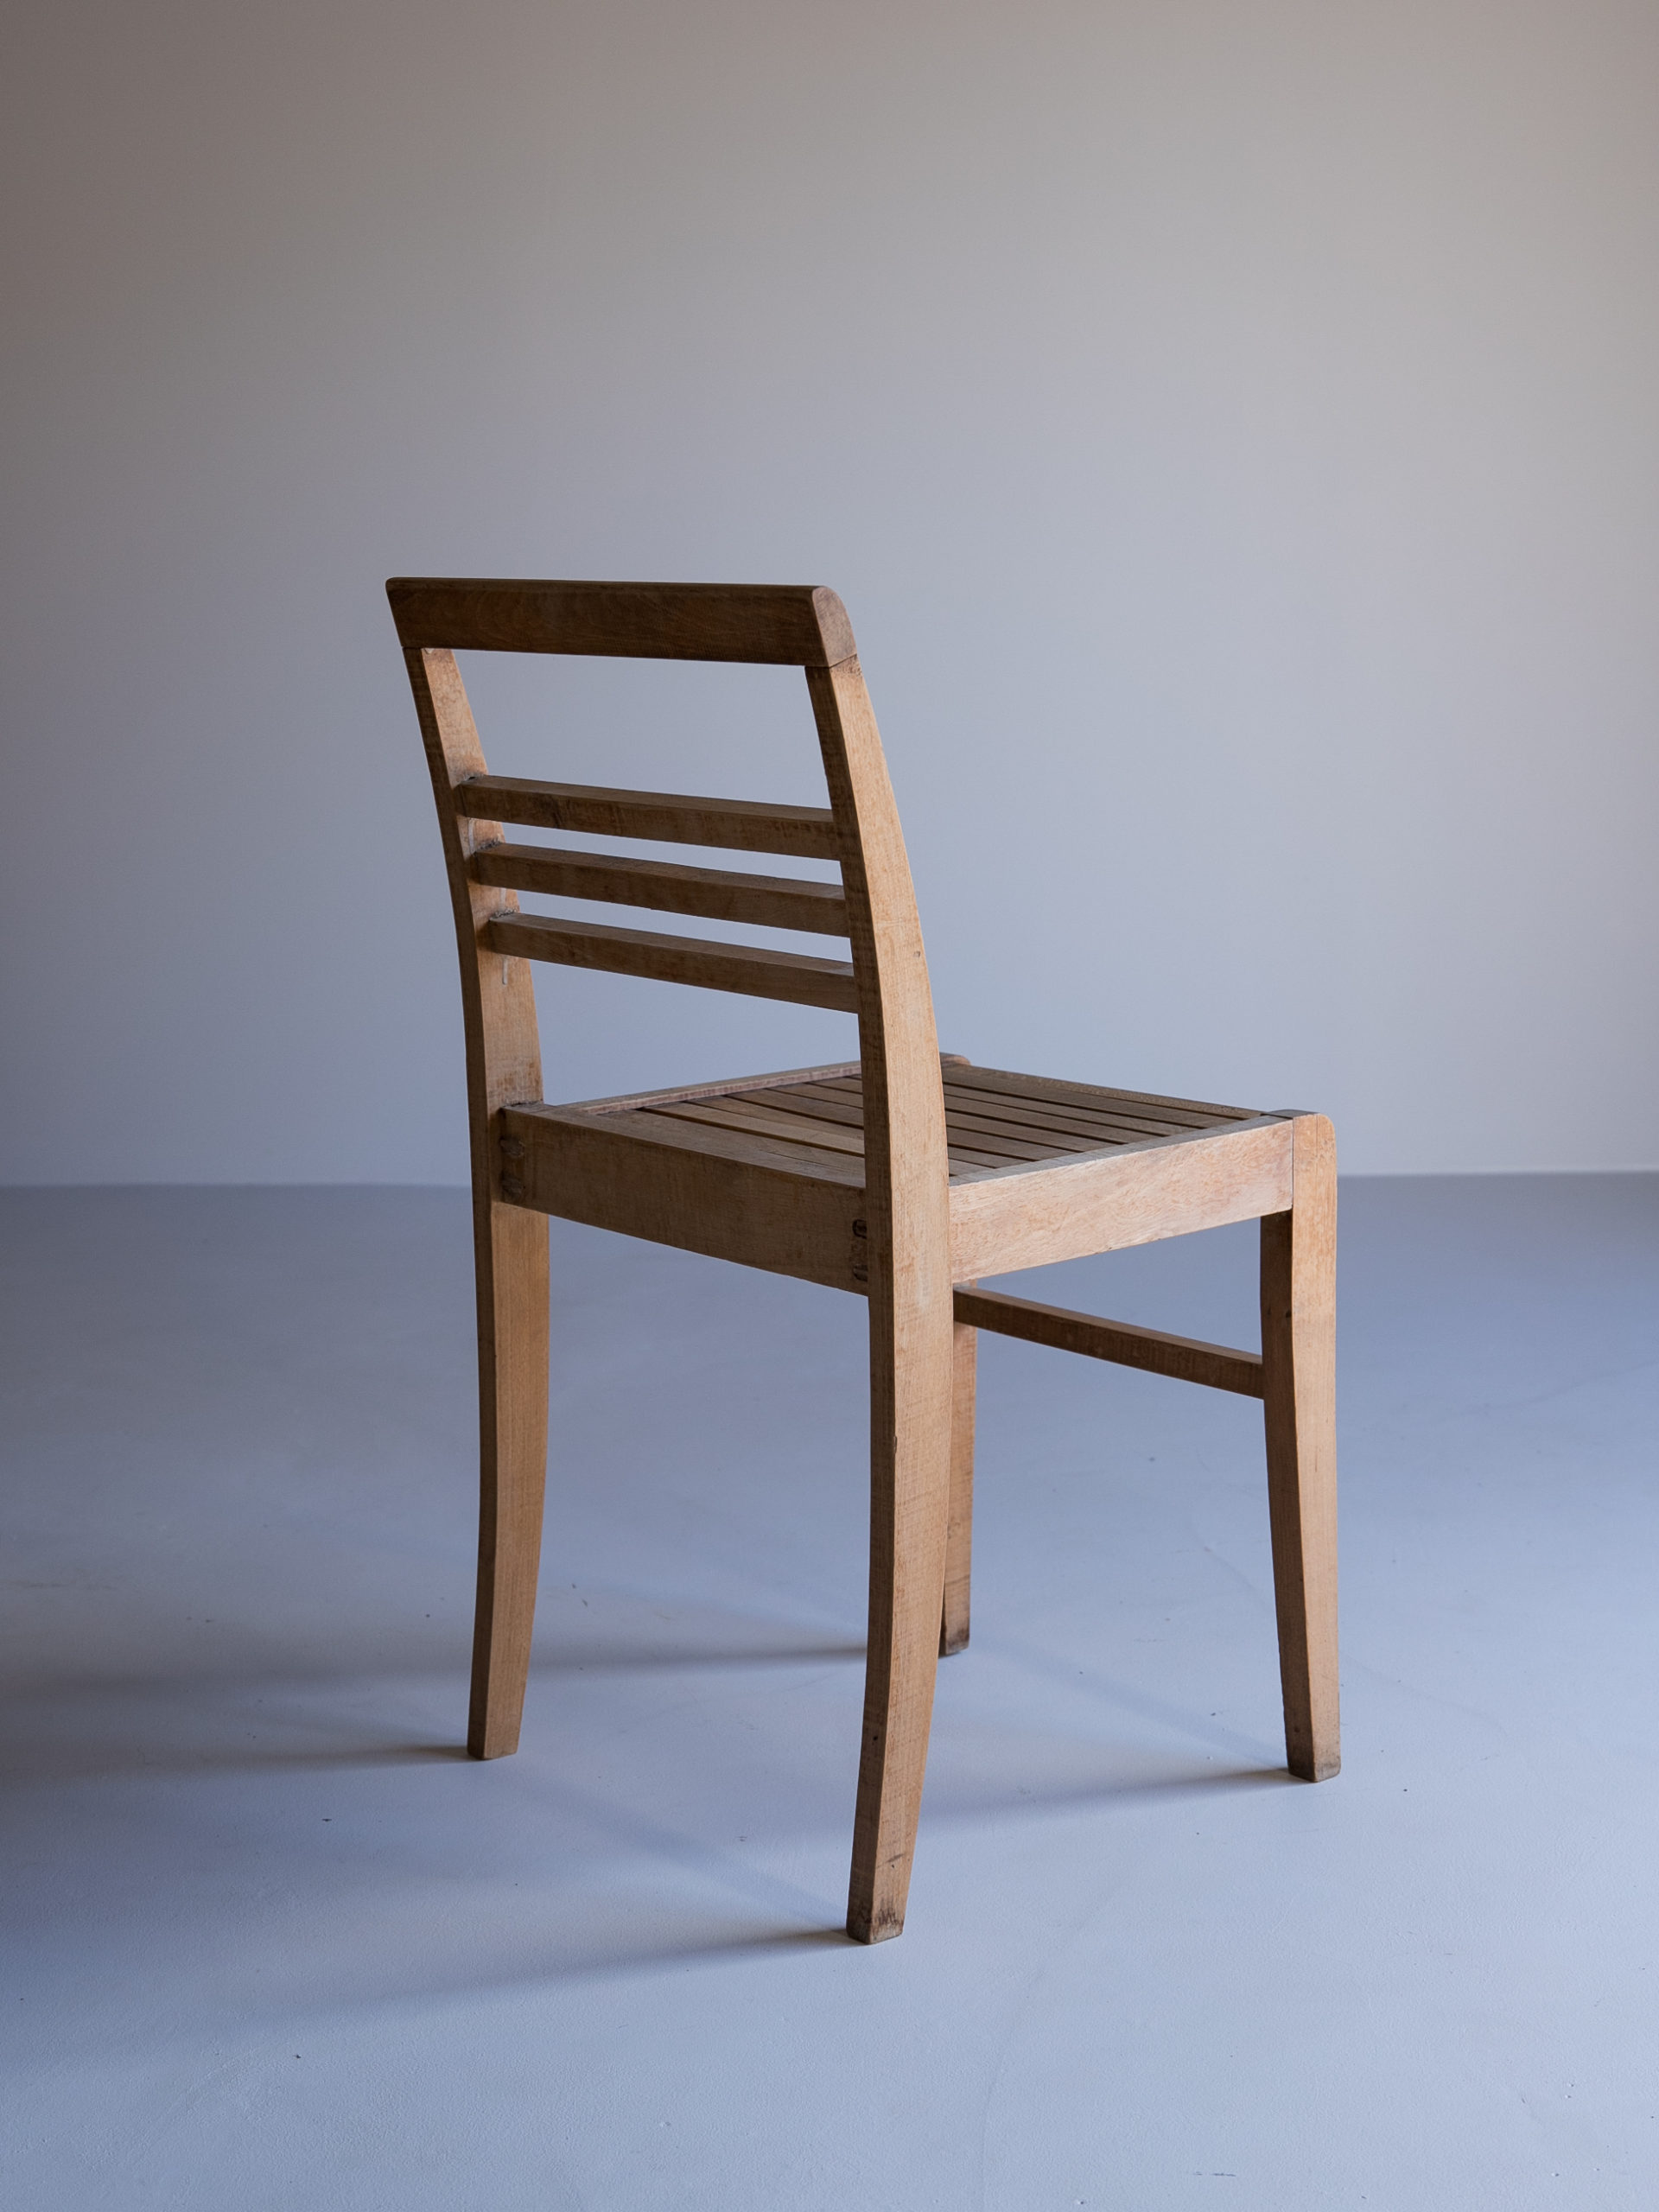 Wood chair by Rene Gabriel